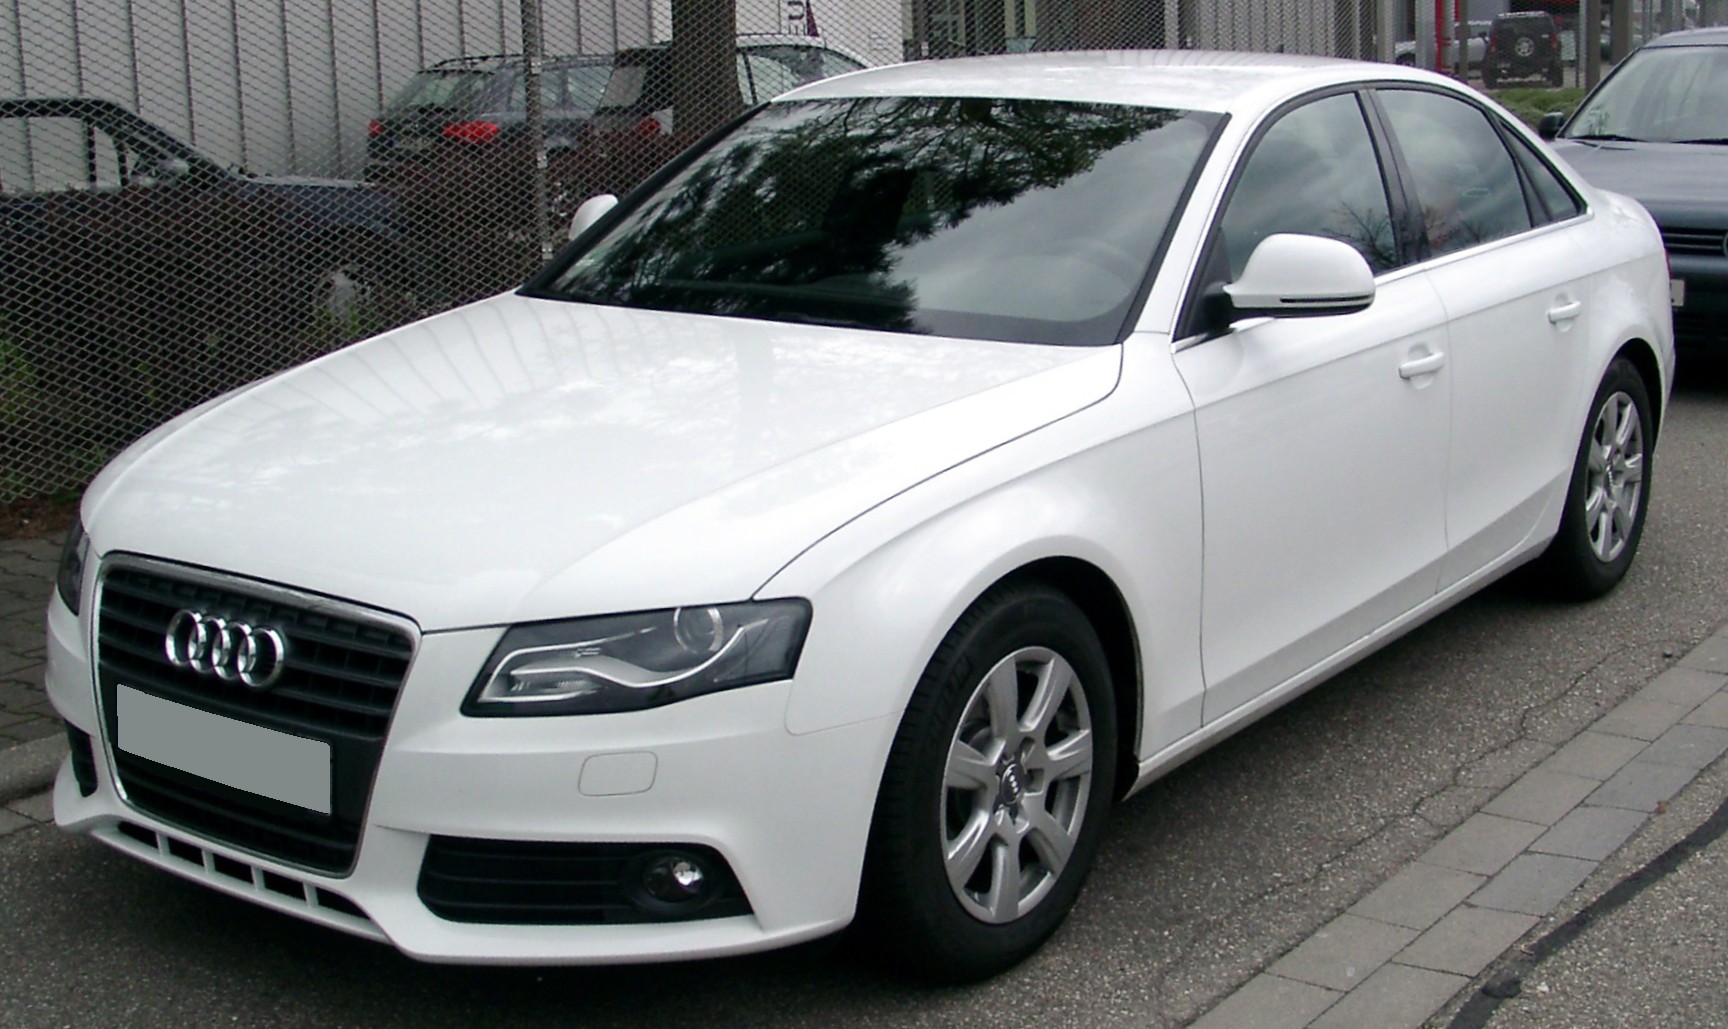 Audi_A4_B8_front_20080414.jpg